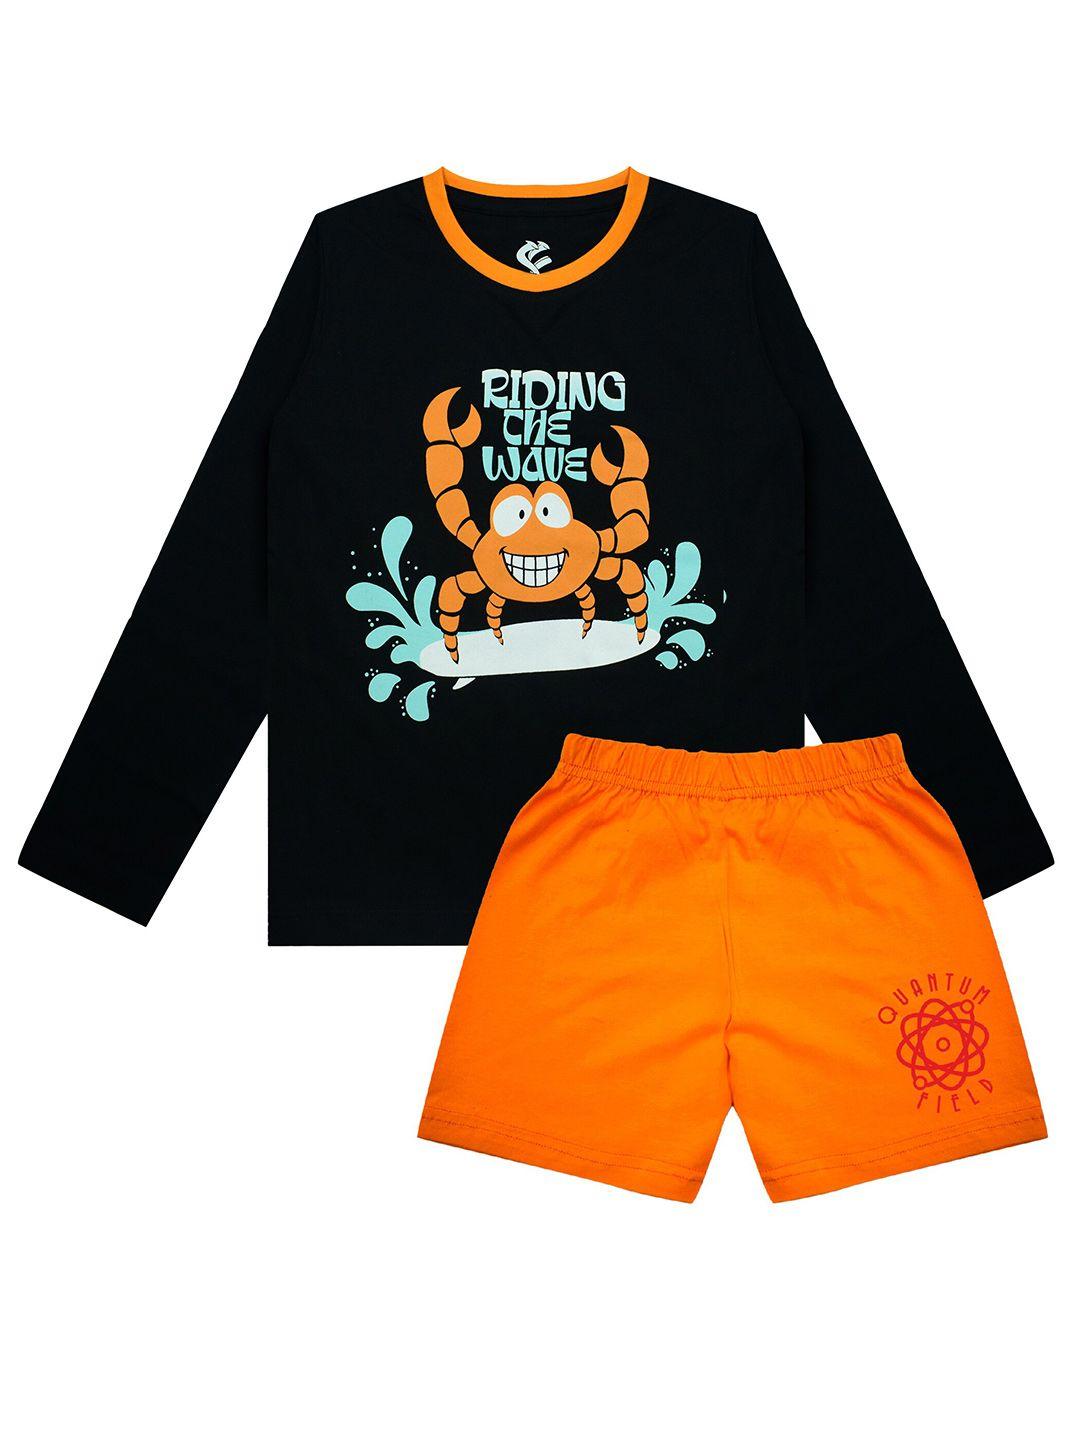 silver fang boys black & orange printed t-shirt with shorts